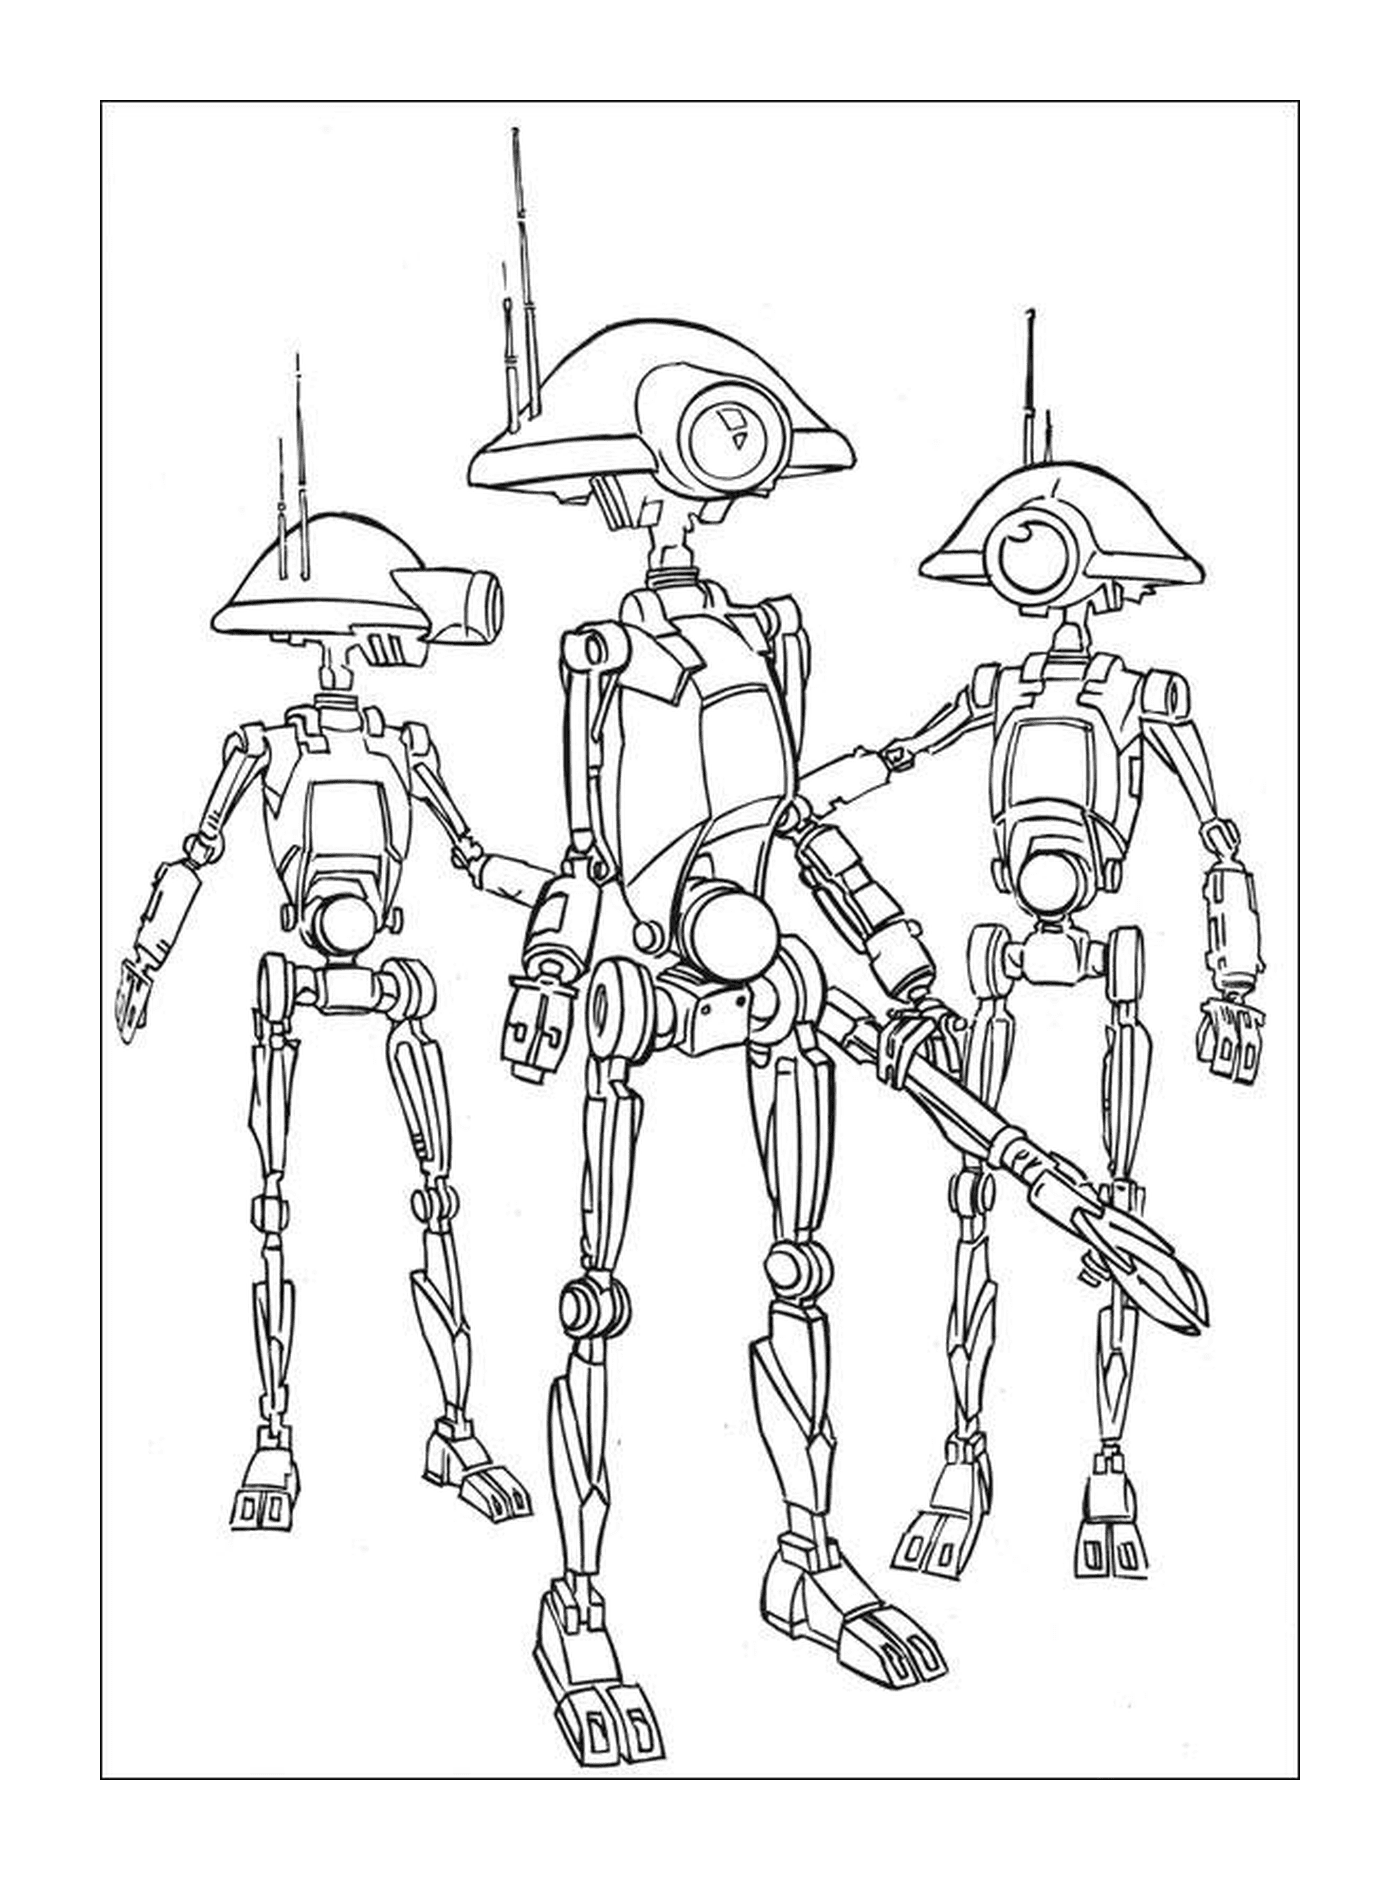  Tres droides alineados 